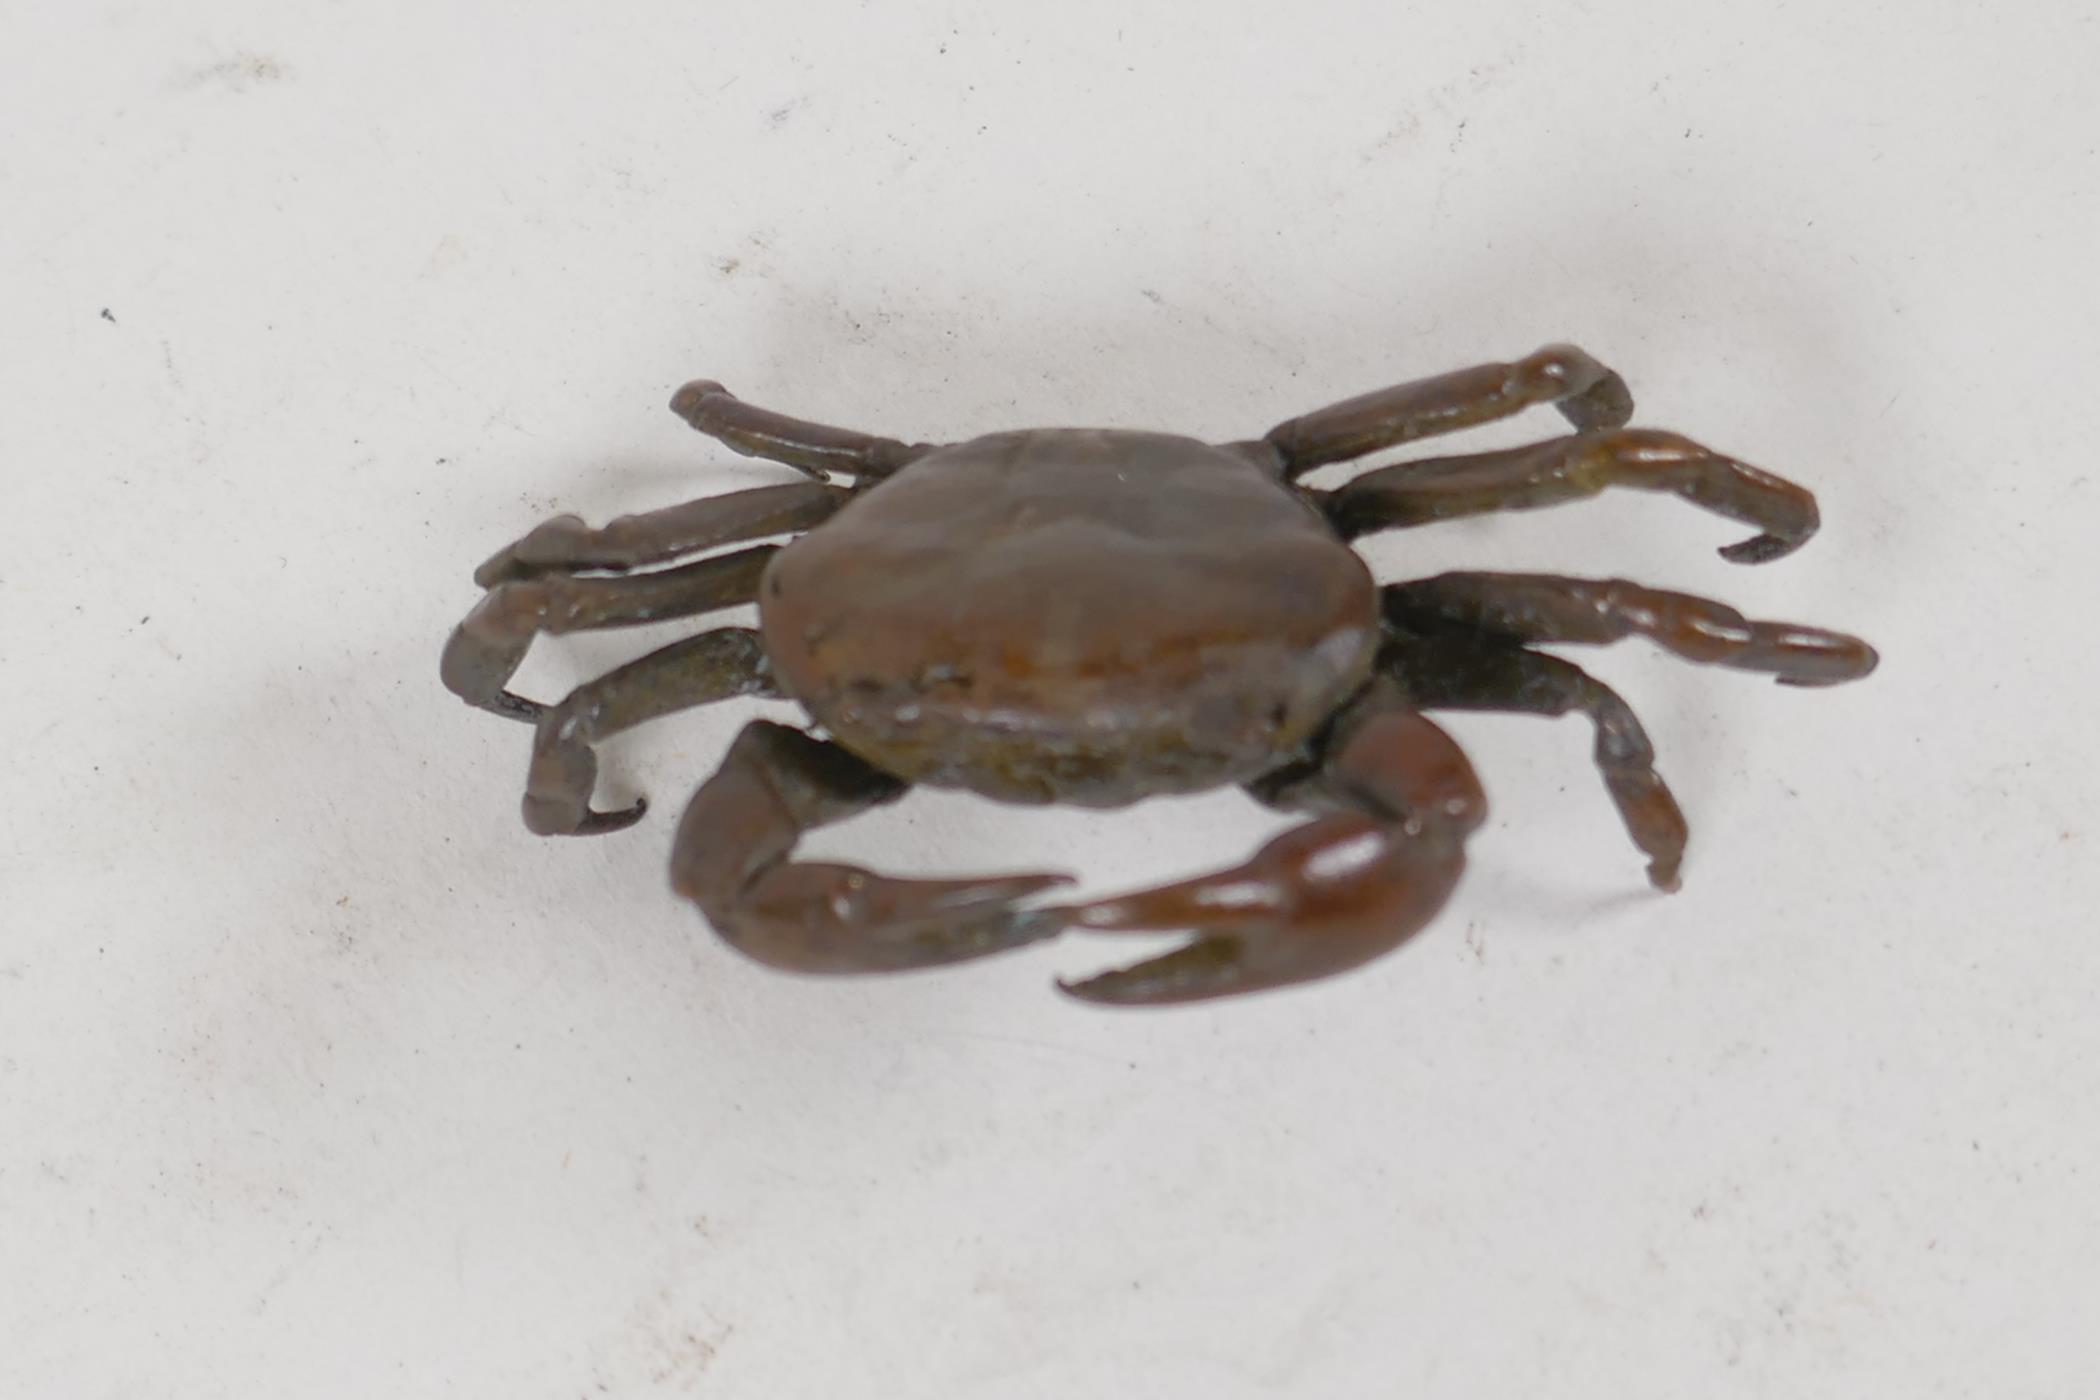 A small Jizi style bronze figurine of a crab, 2" wide